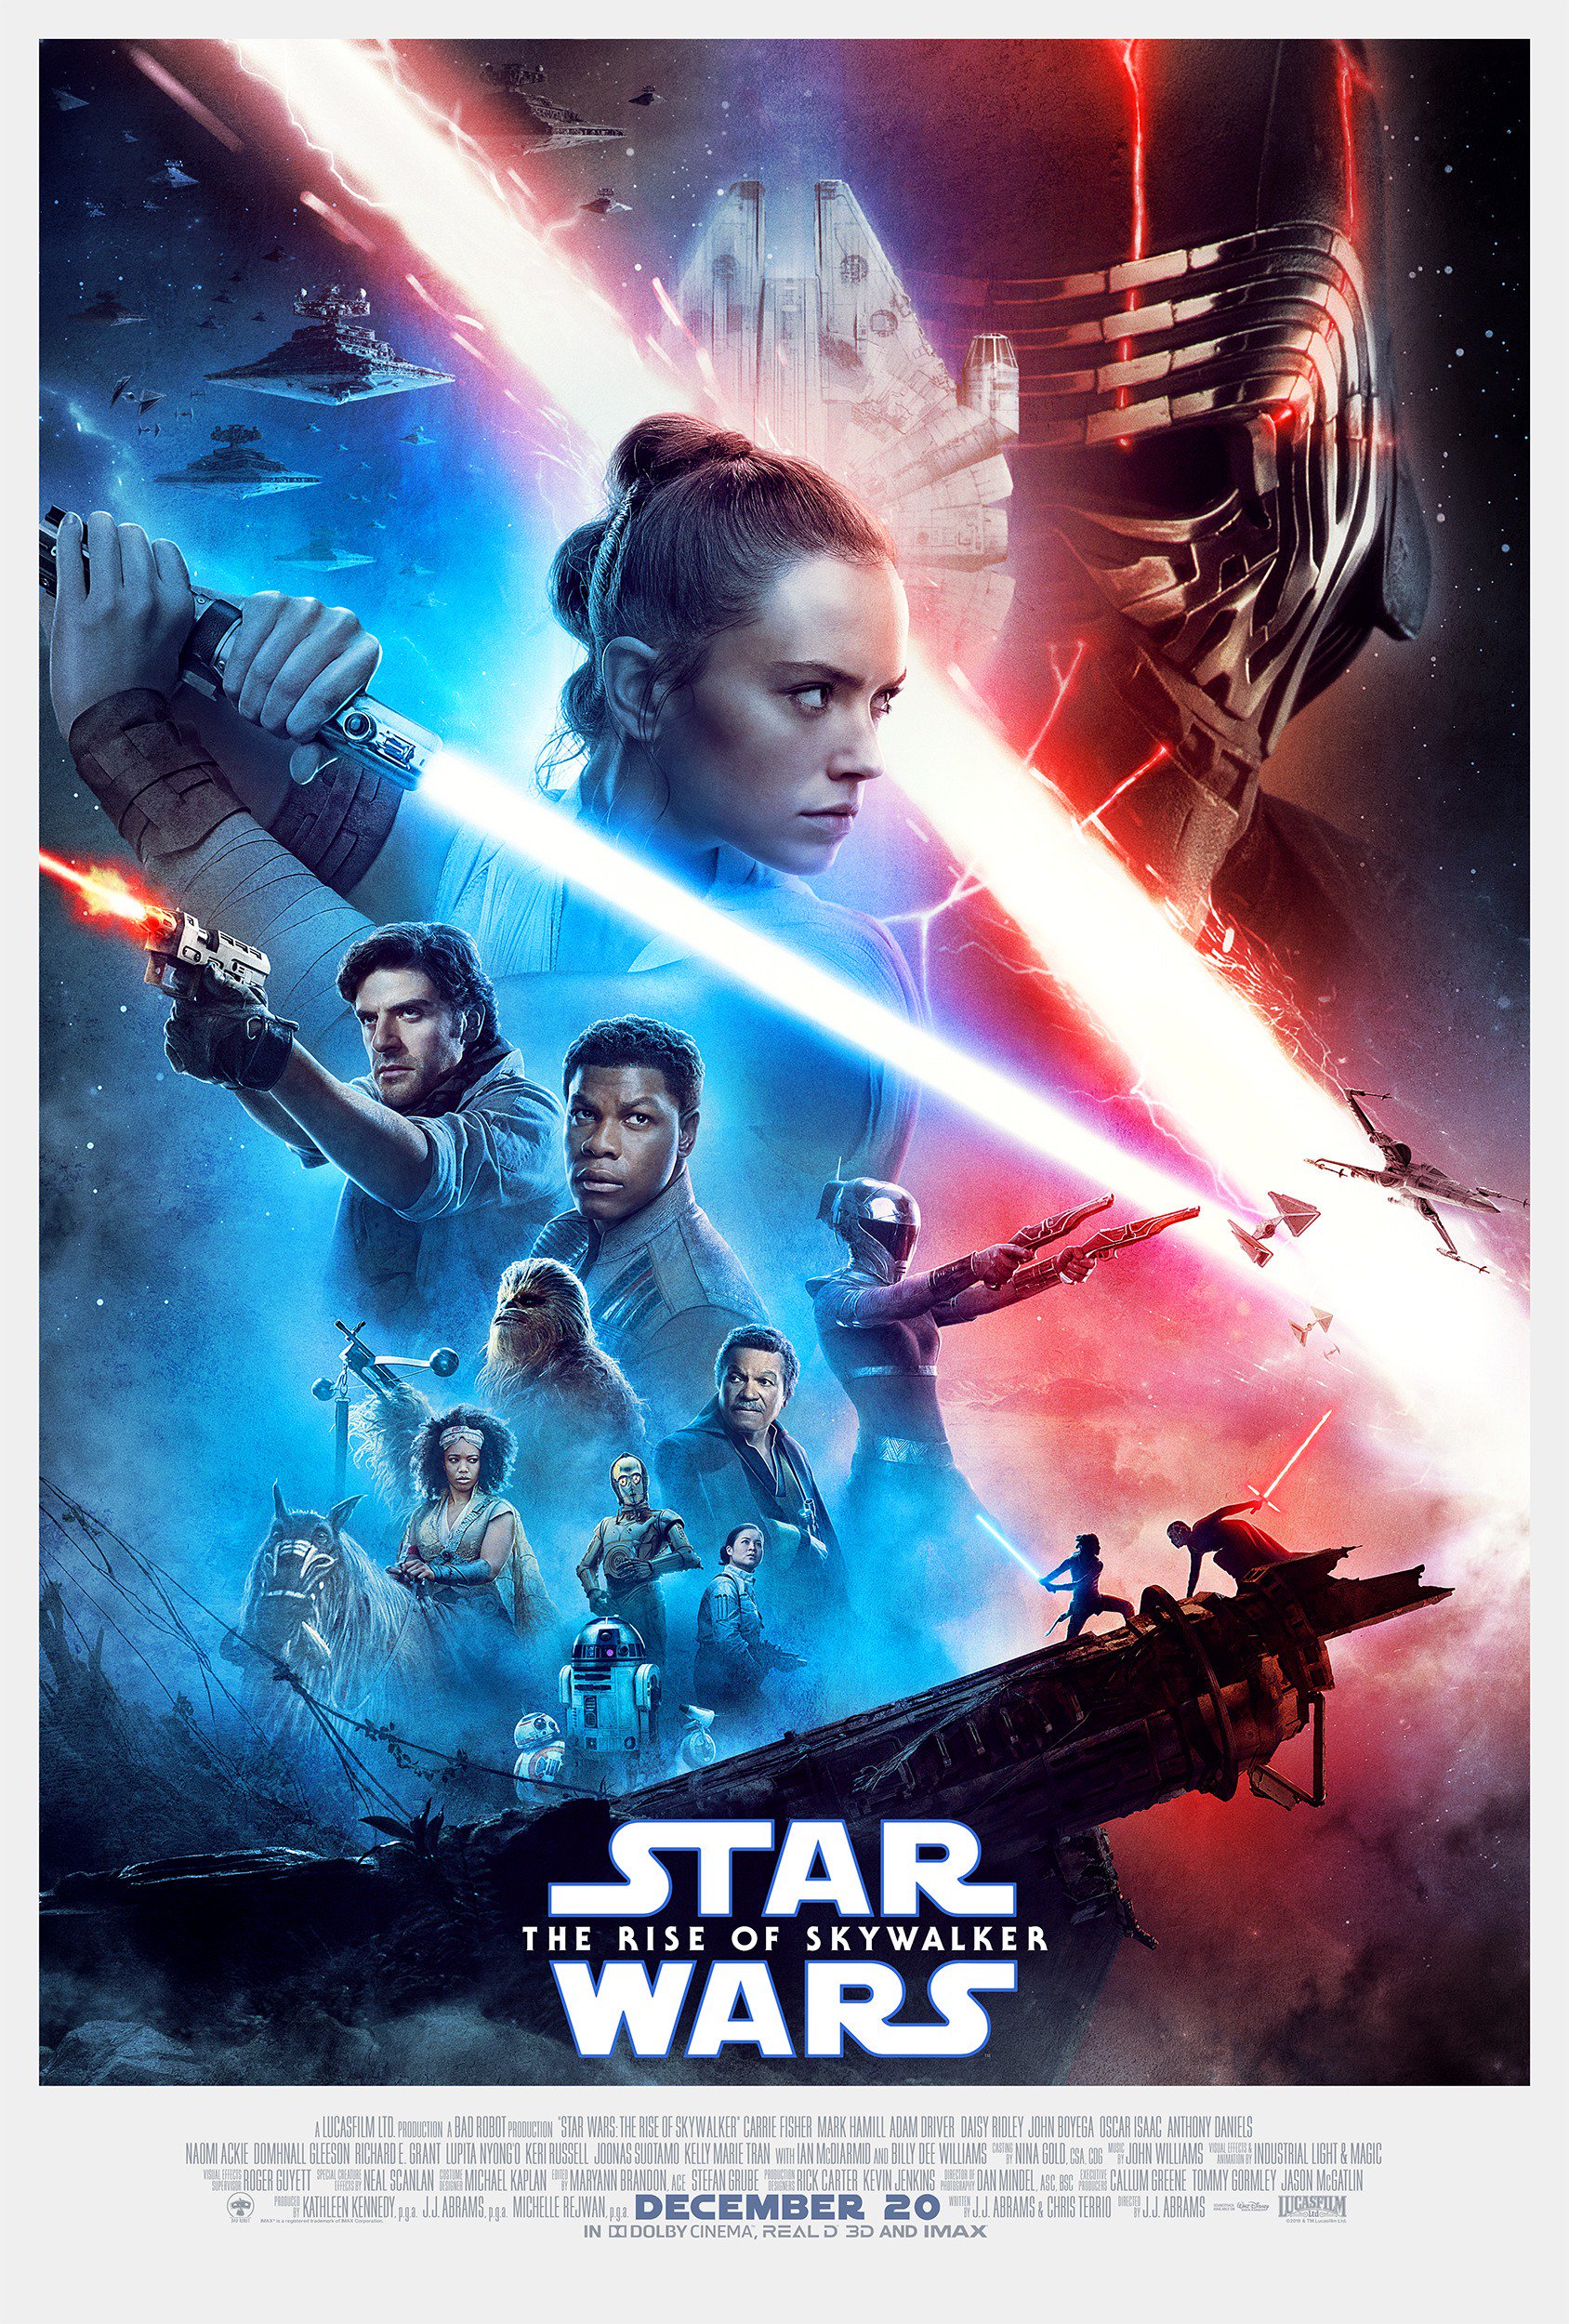 Star-Wars-Episode-IX-The-Rise-of-Skywalker-Poster.jpg